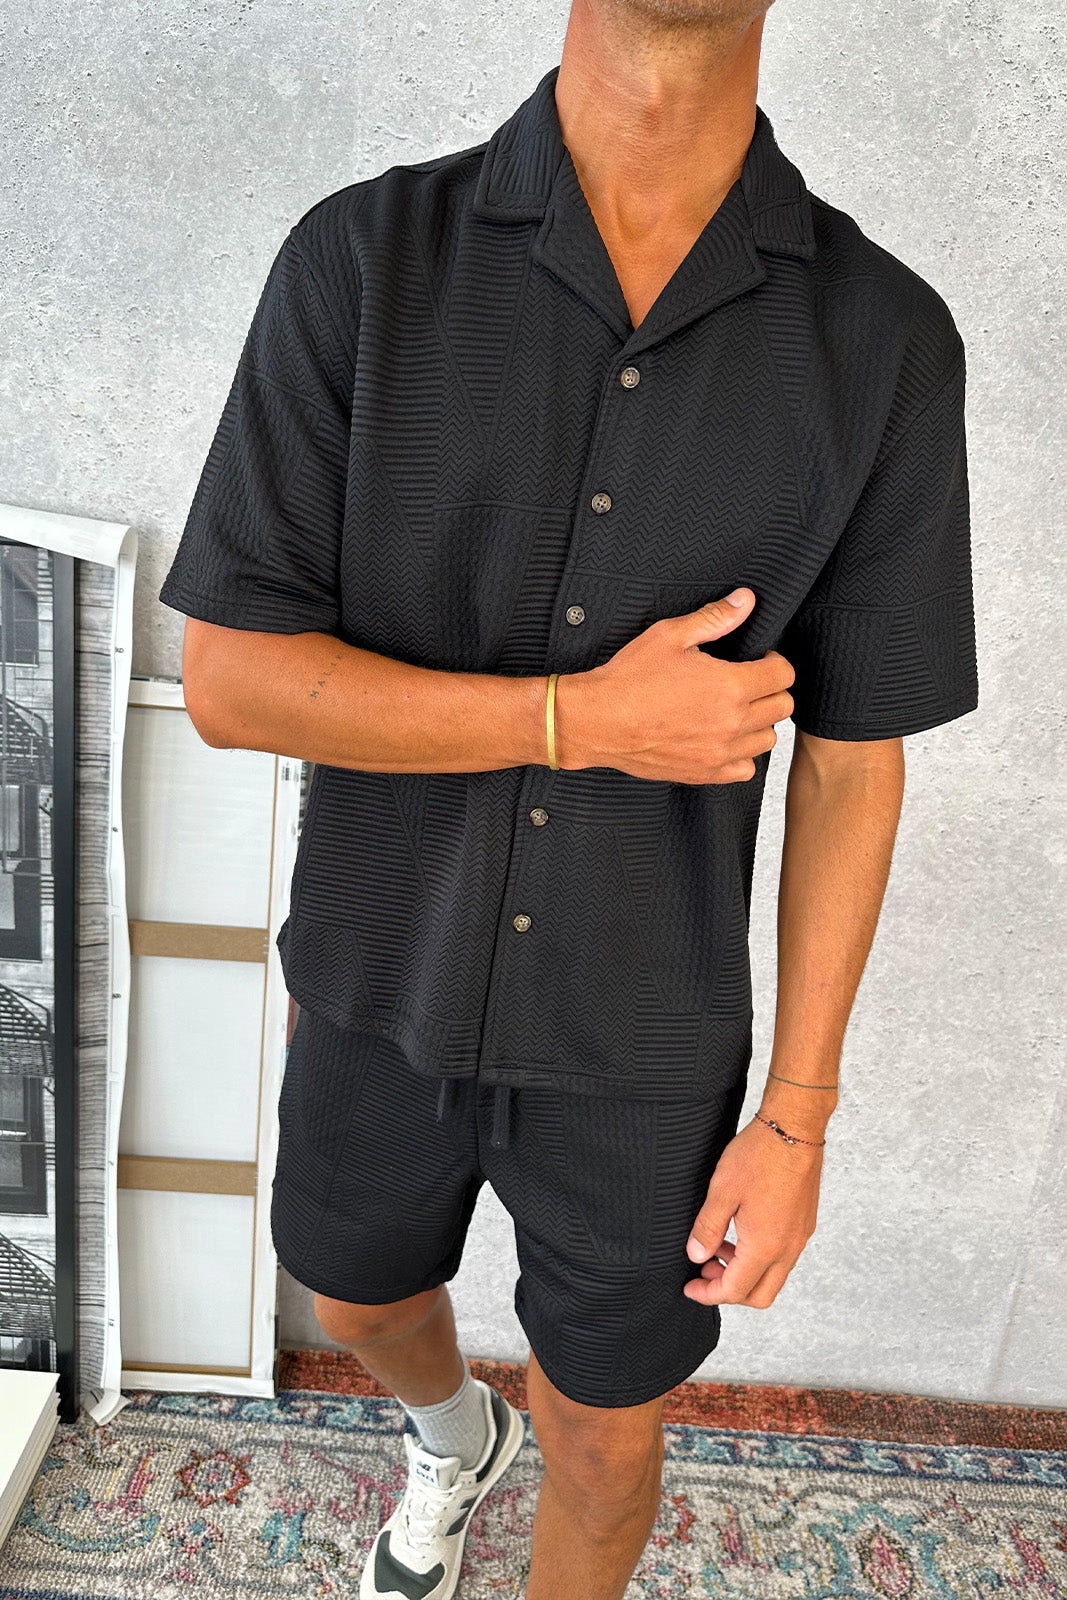 Noah Texture Shirt Black